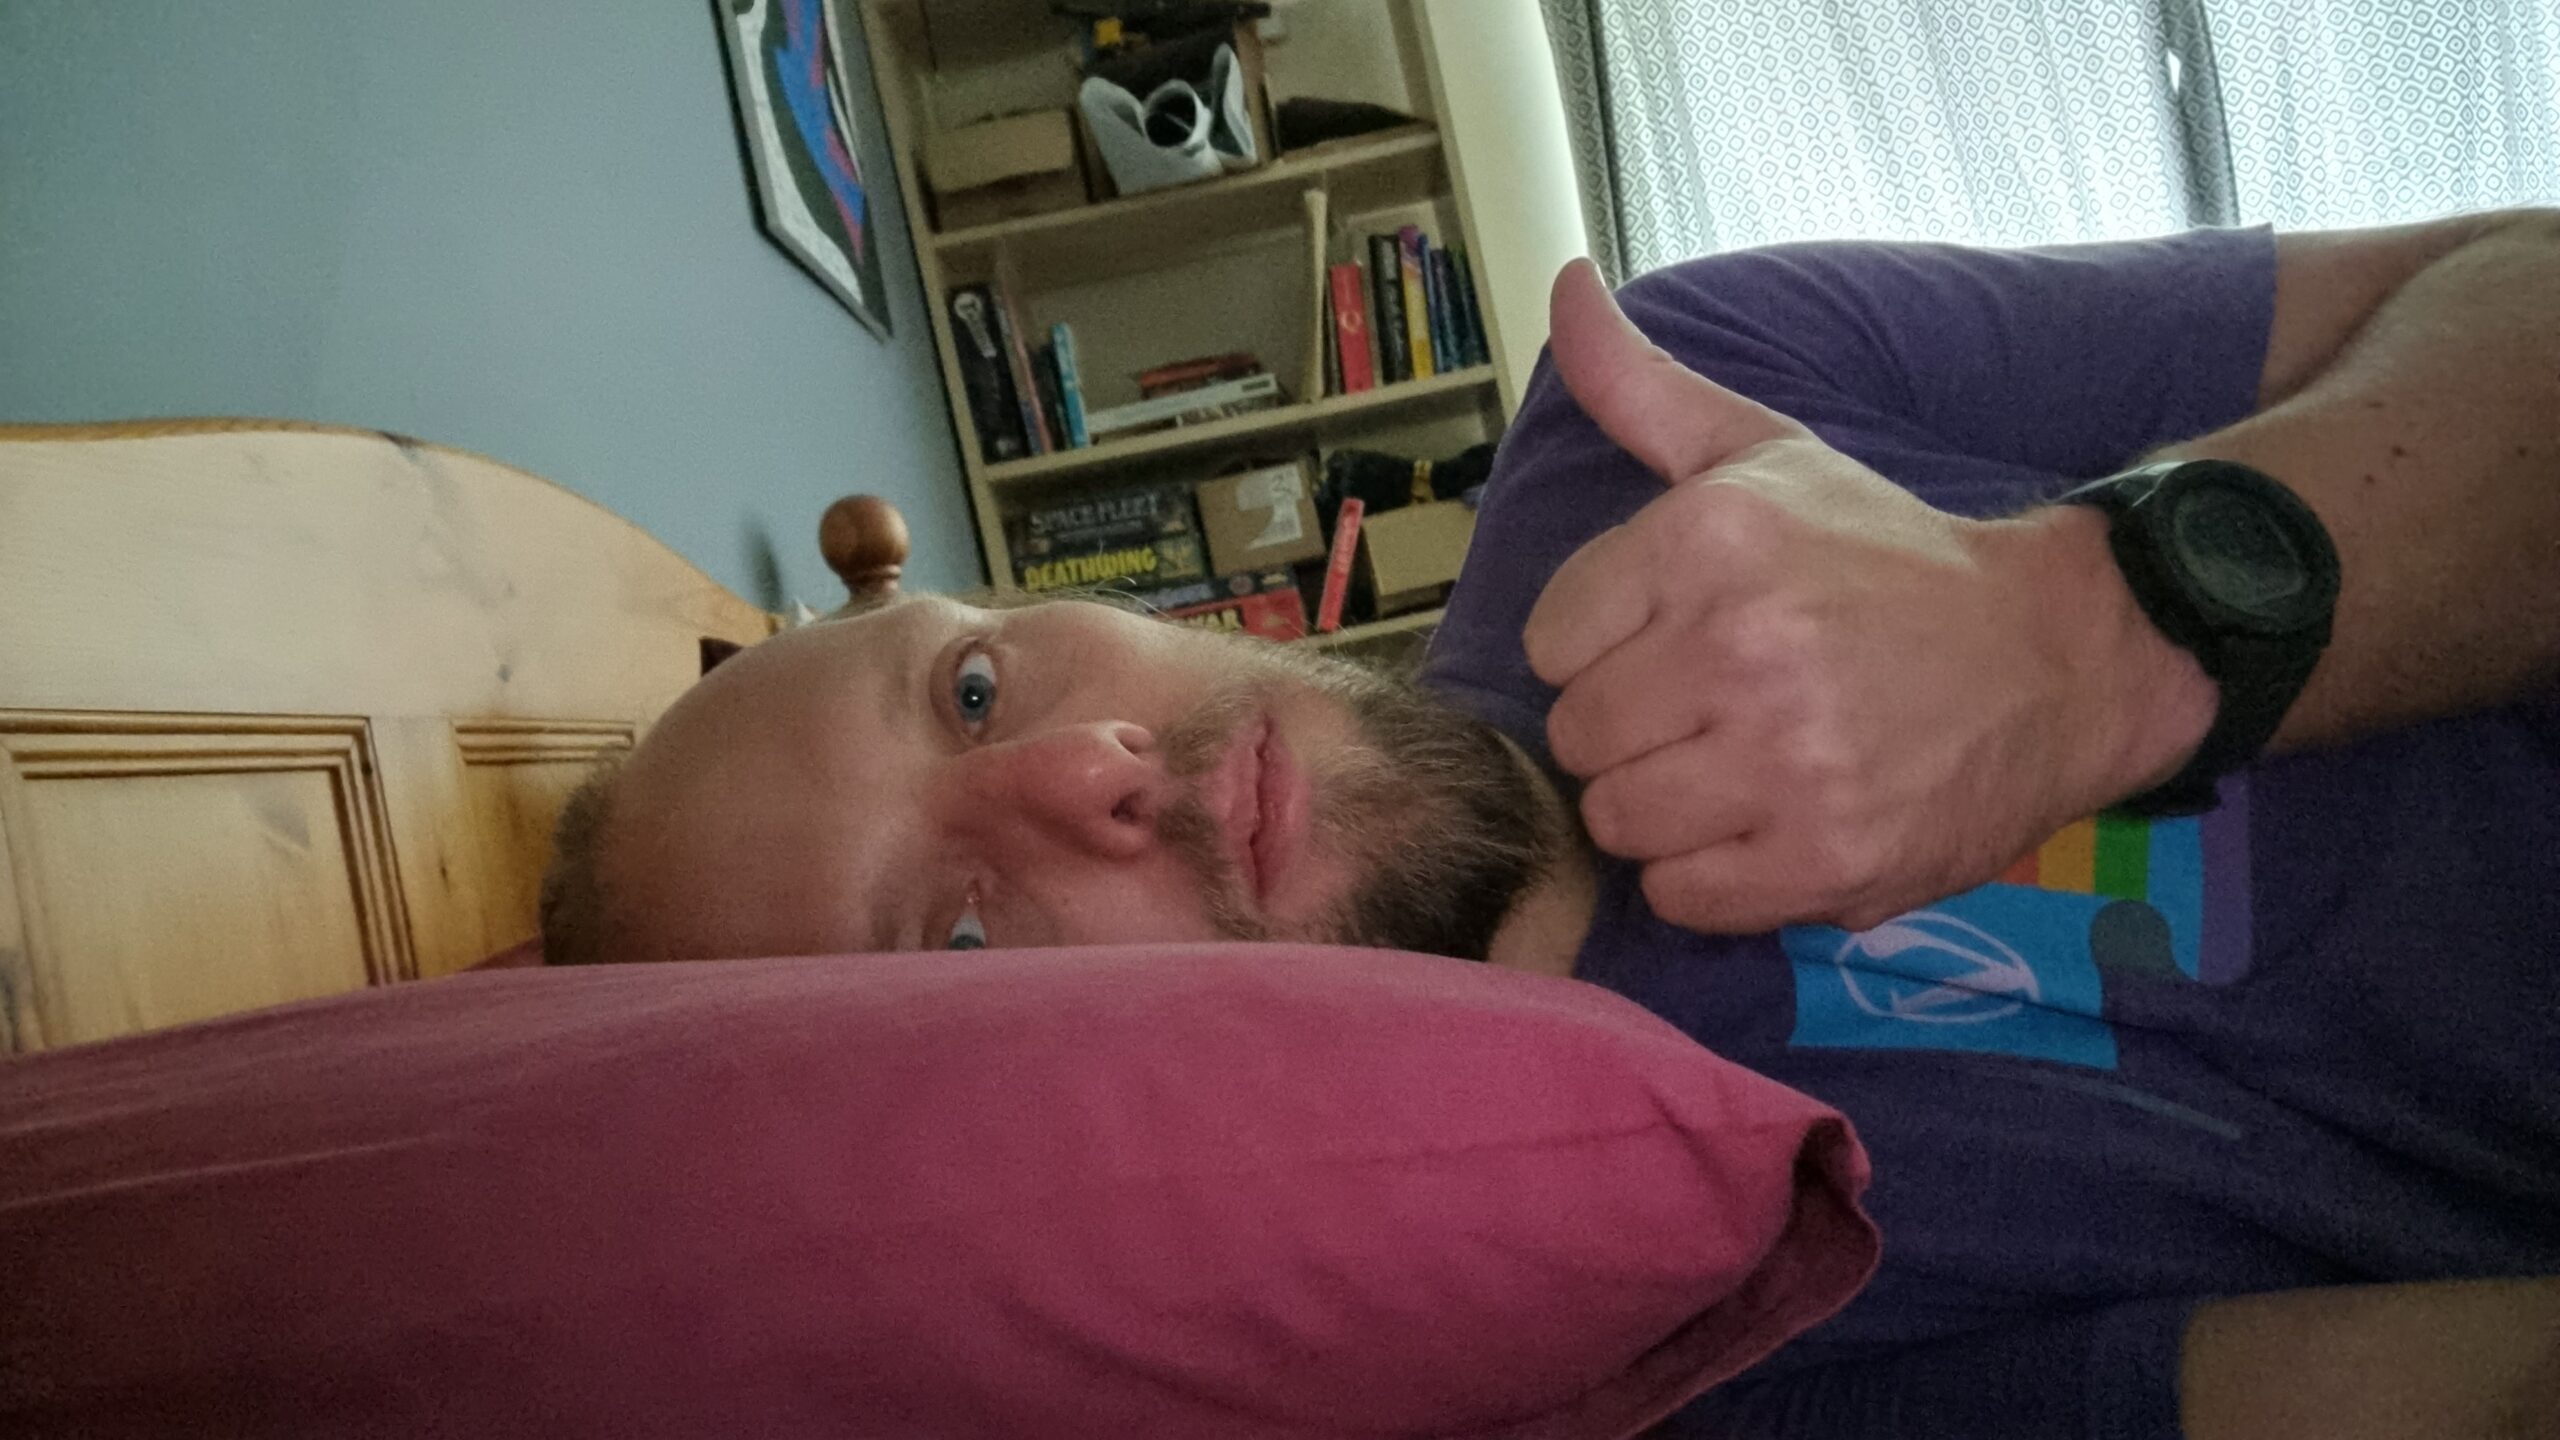 Dan lying in bed, giving a weak "thumbs up".